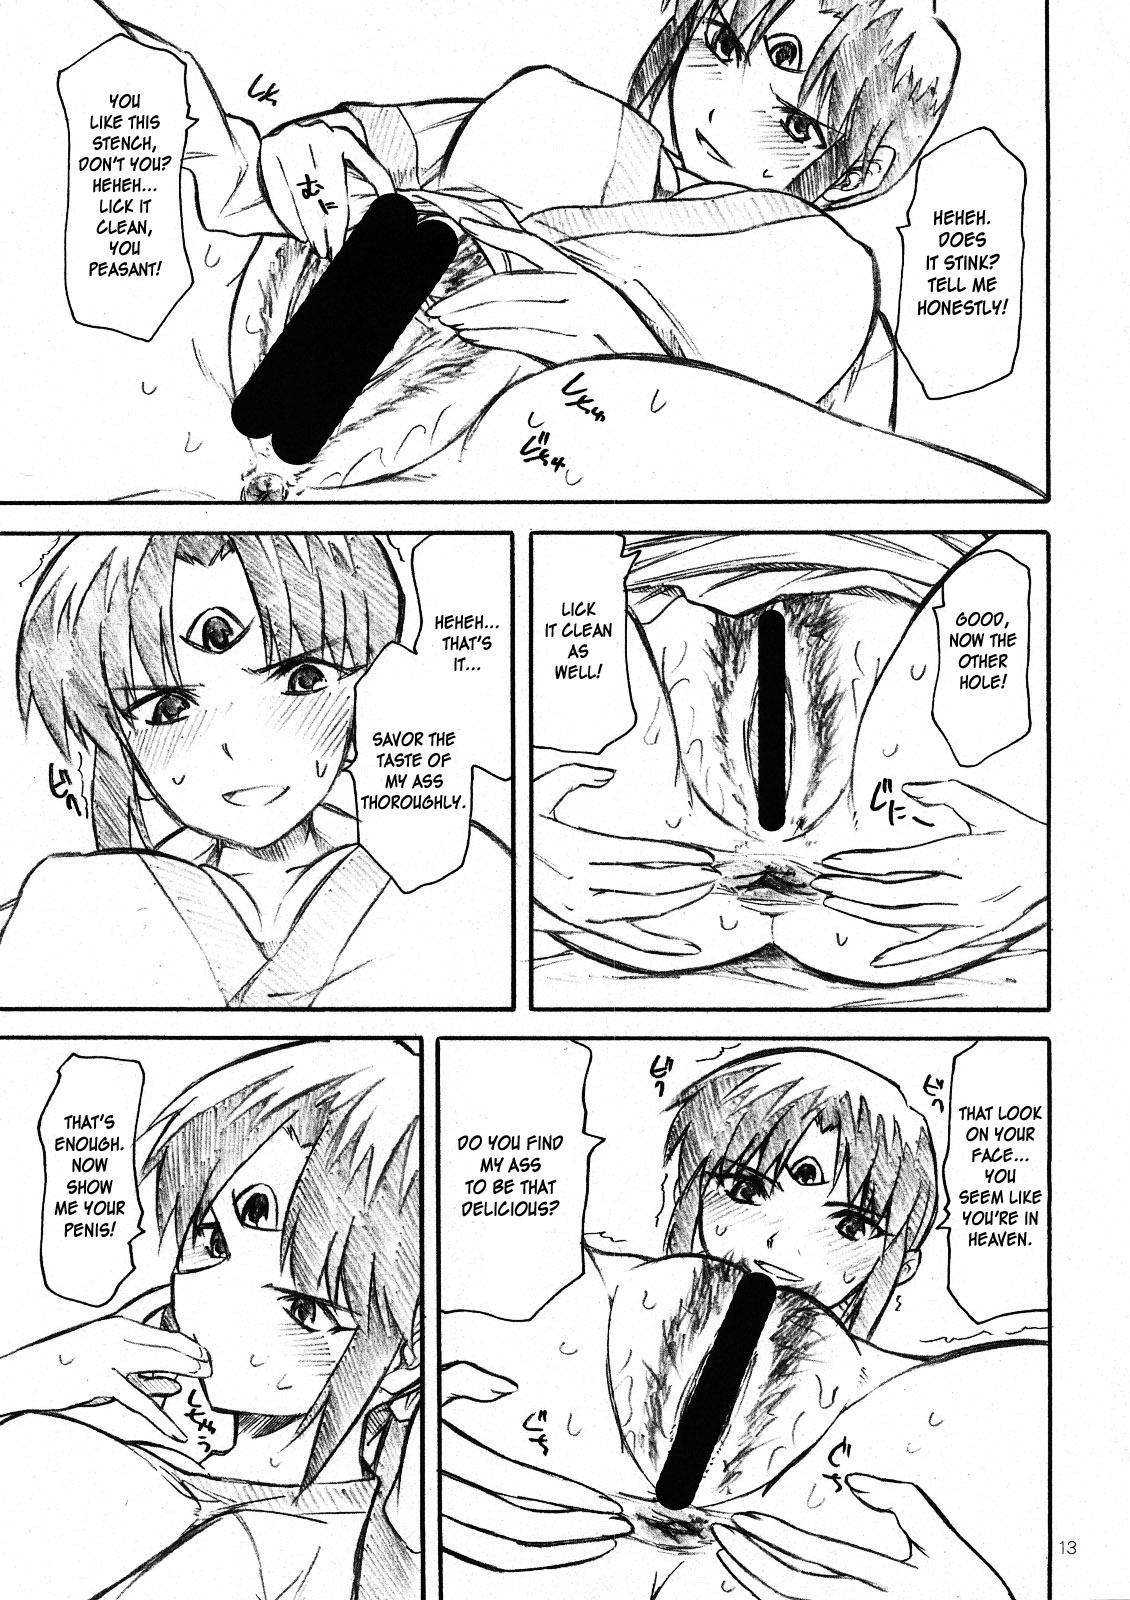 Women Fucking Yorozu fetishism 2 - Azumanga daioh Ghost sweeper mikami 3x3 eyes Sansha sanyou Blow Job - Page 12